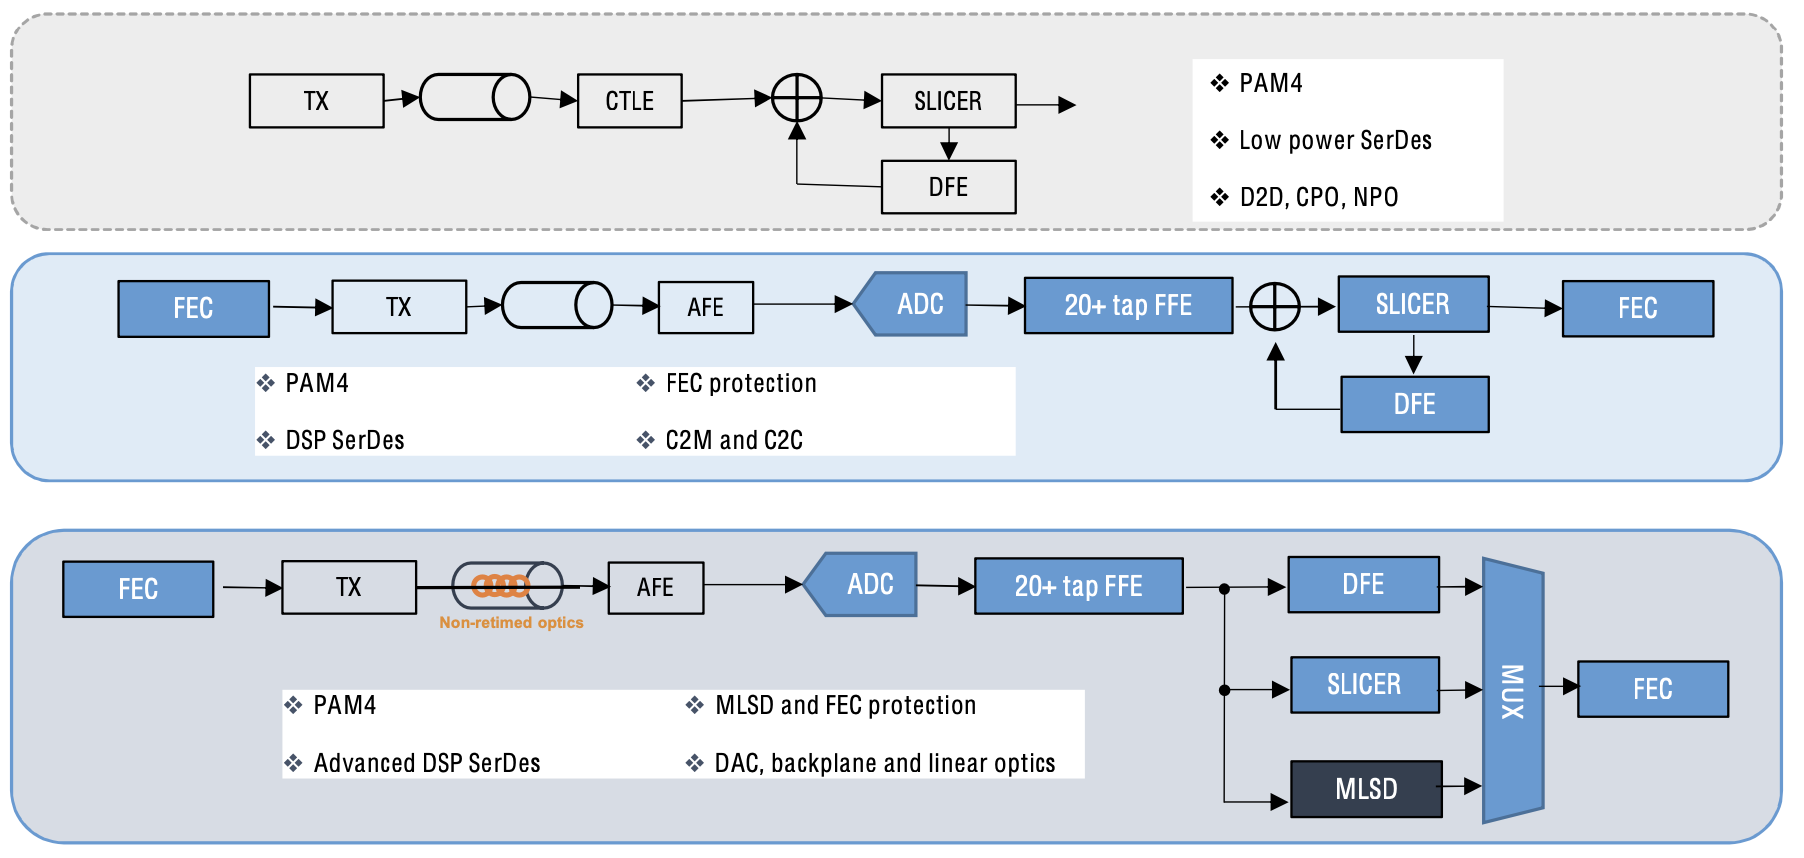 Sample of Broadcom Architectures